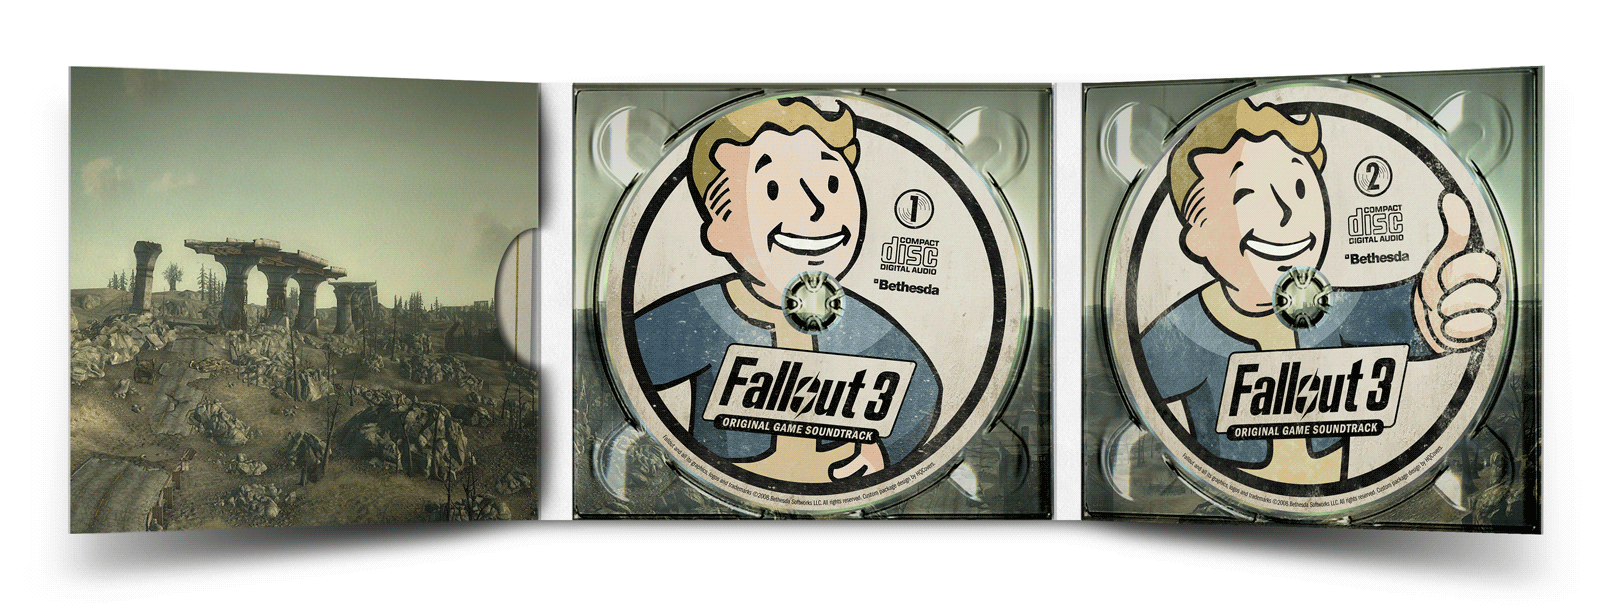 Fallout Series обложка. Ядерный блок фоллаут. Fallout 3 OST. Таблички из игры Fallout. Original game is